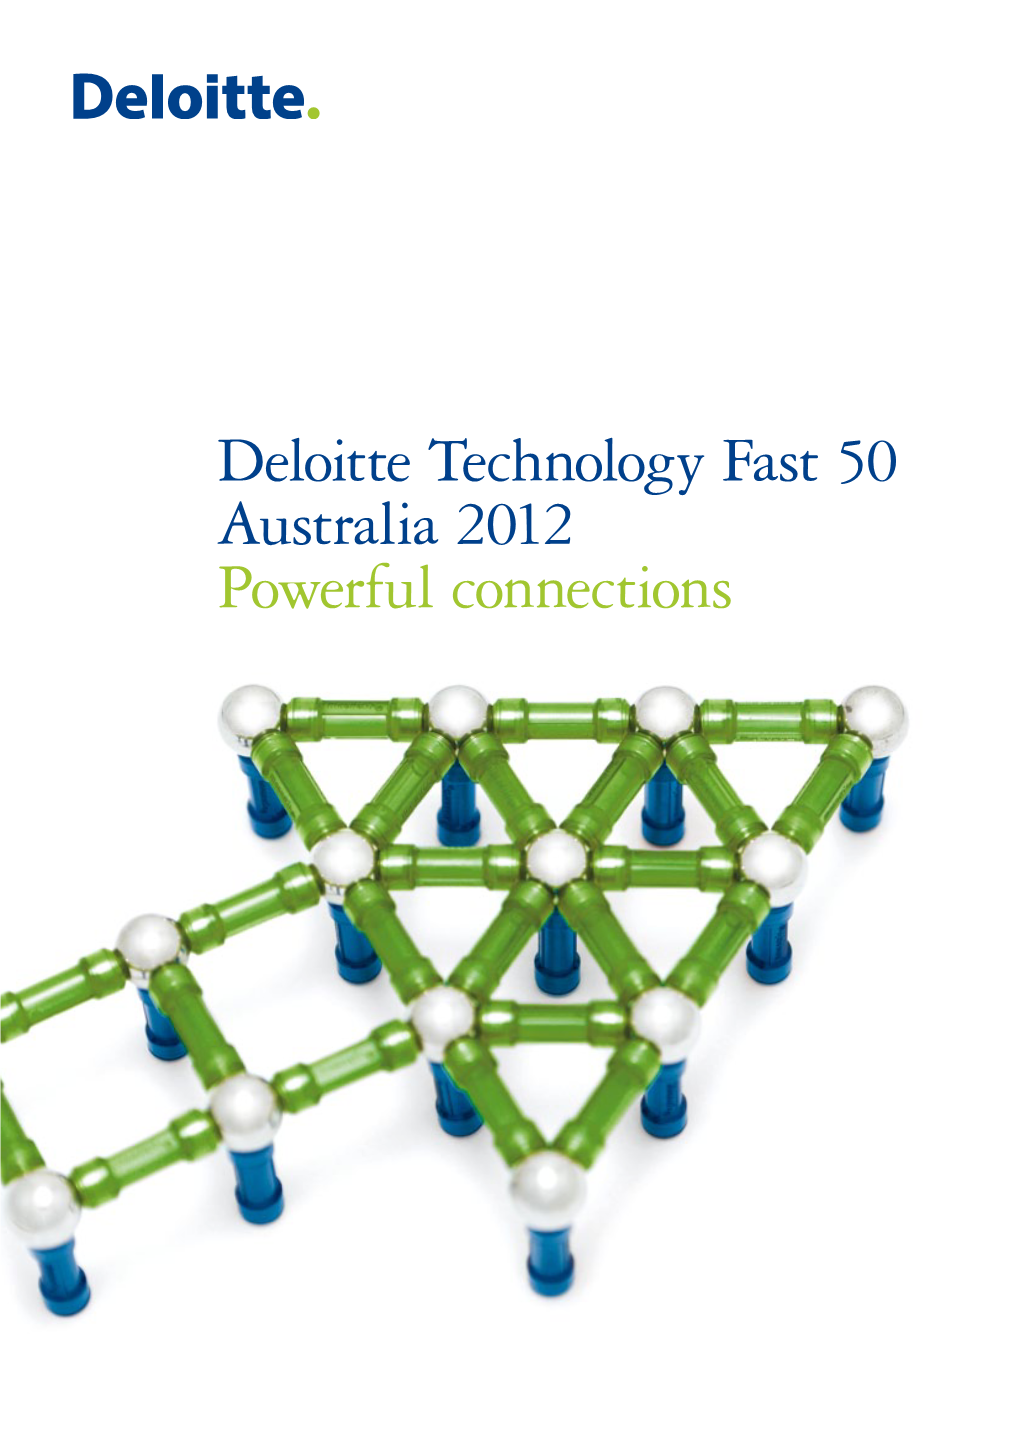 Deloitte Technology Fast 50 Australia 2012 Powerful Connections Welcome to the Deloitte Technology Fast 50 Australia 2012